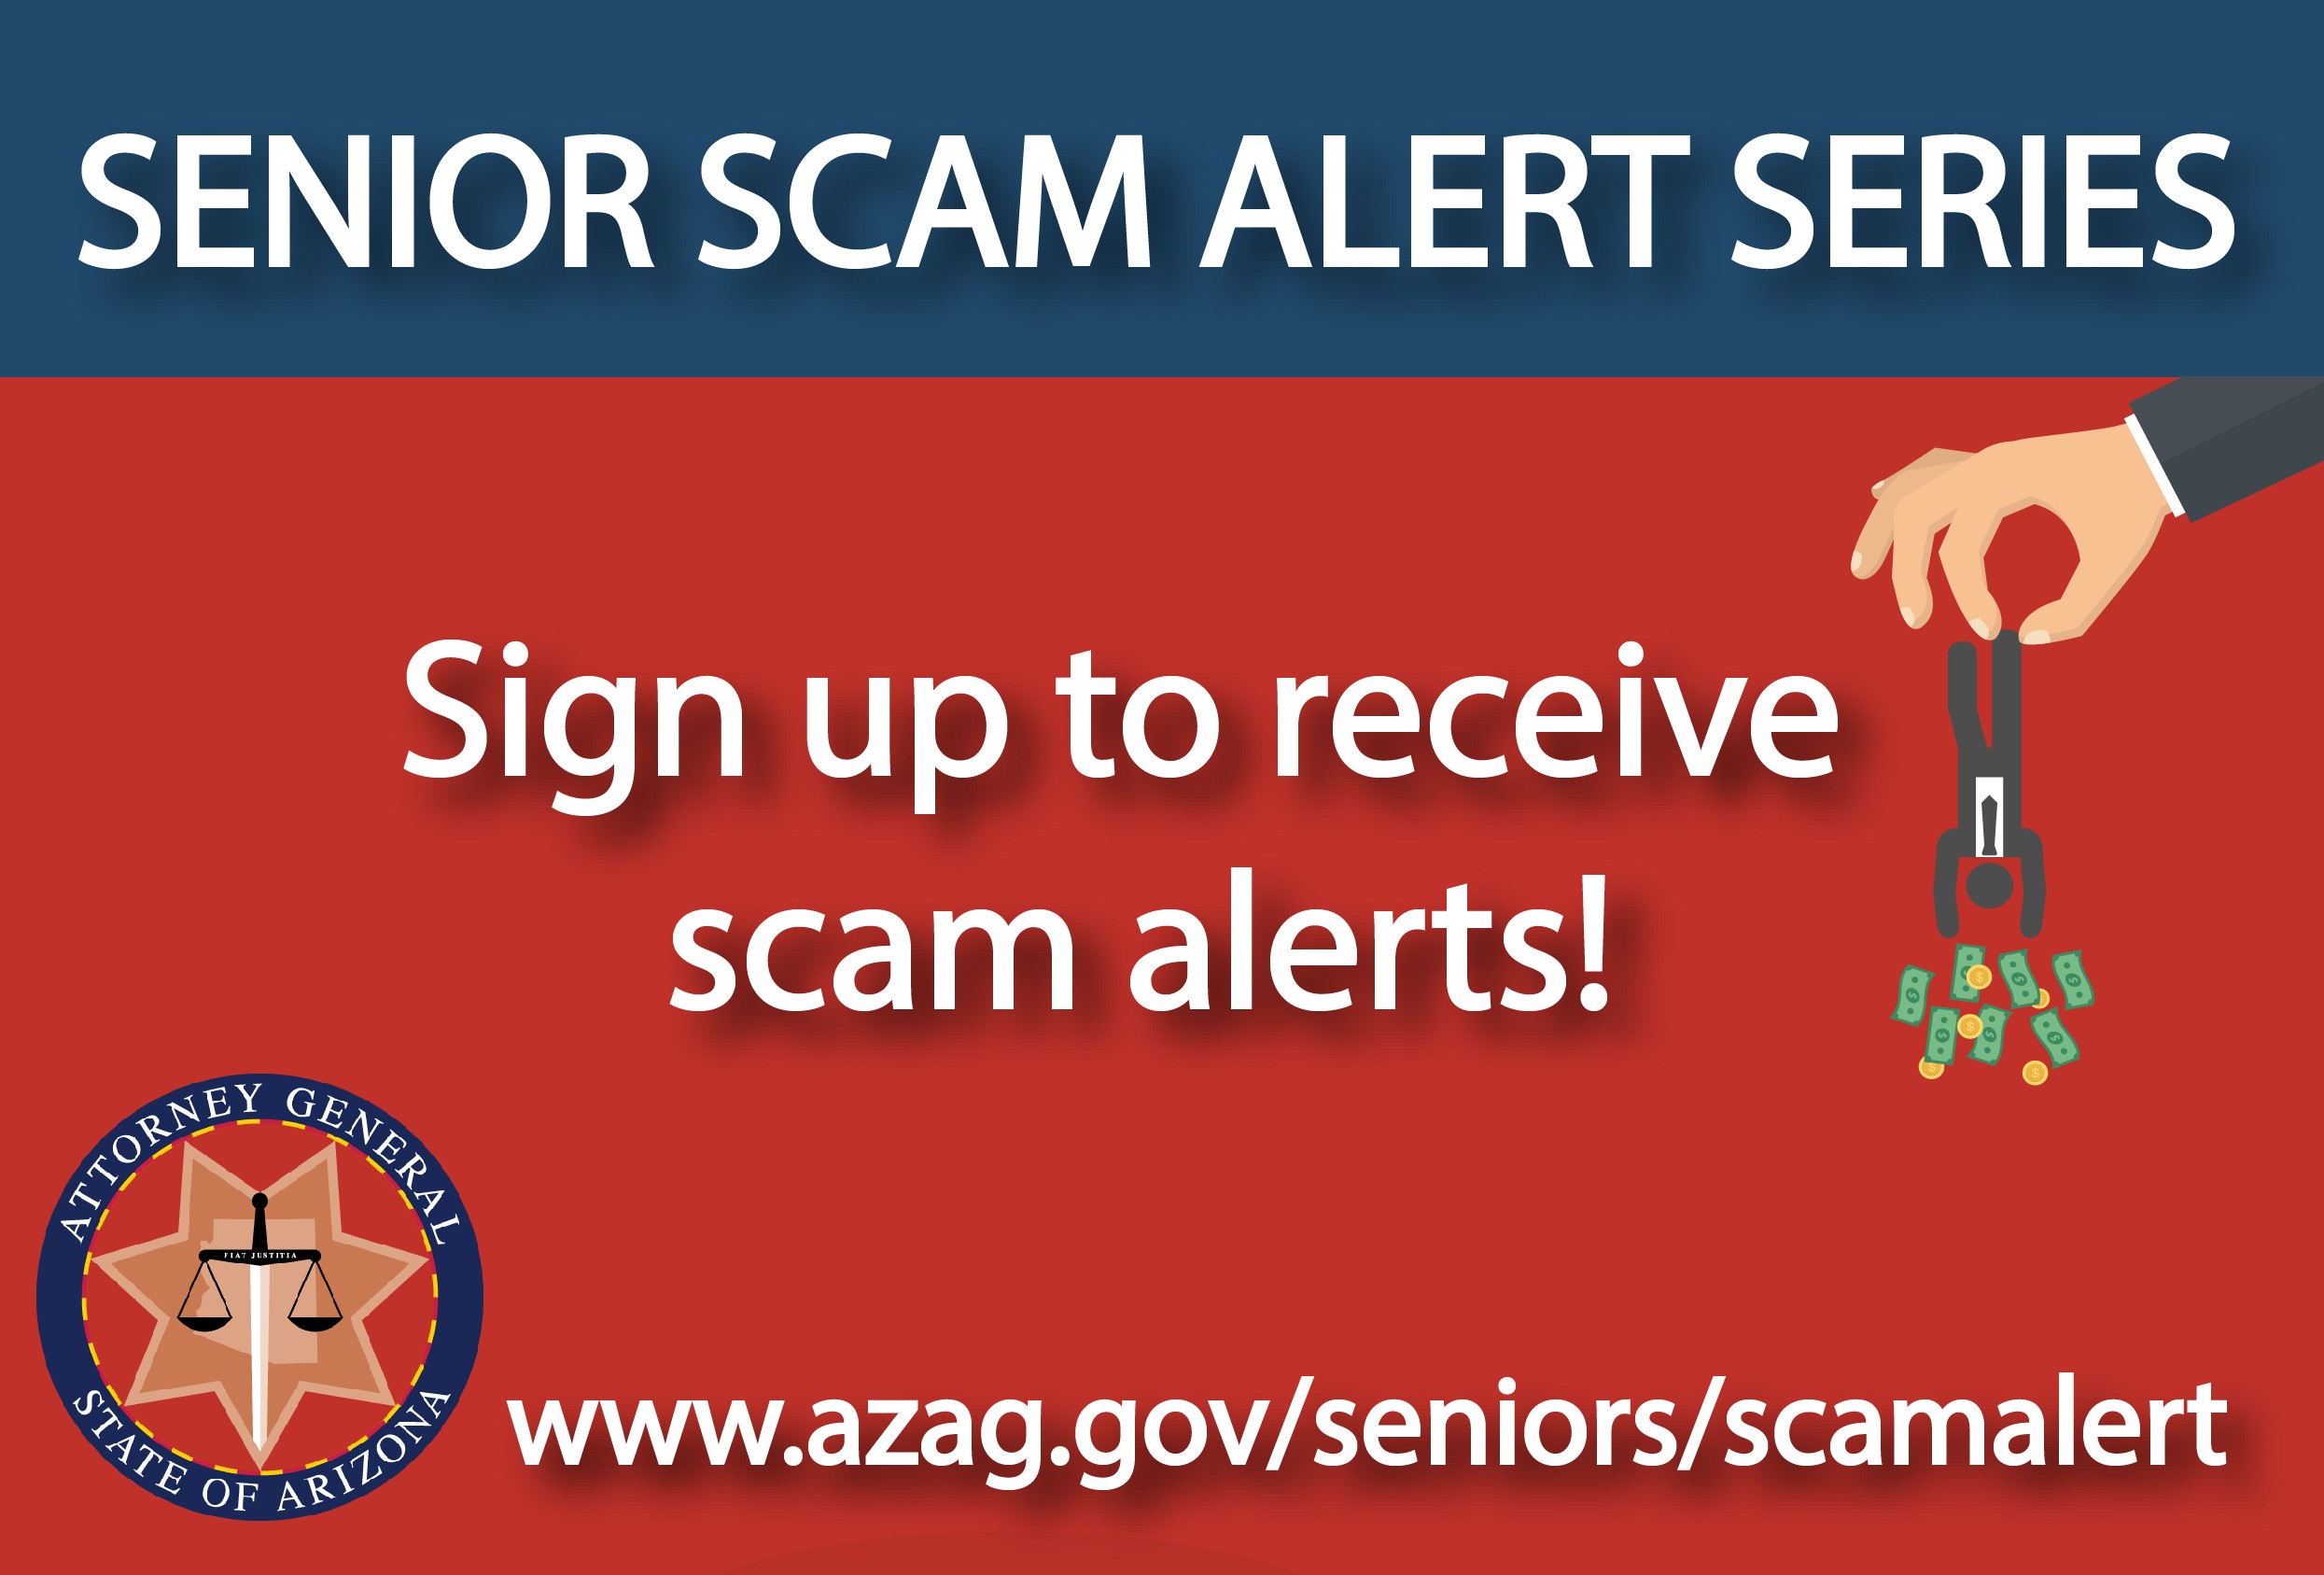 Senior Scam Alert Series banner